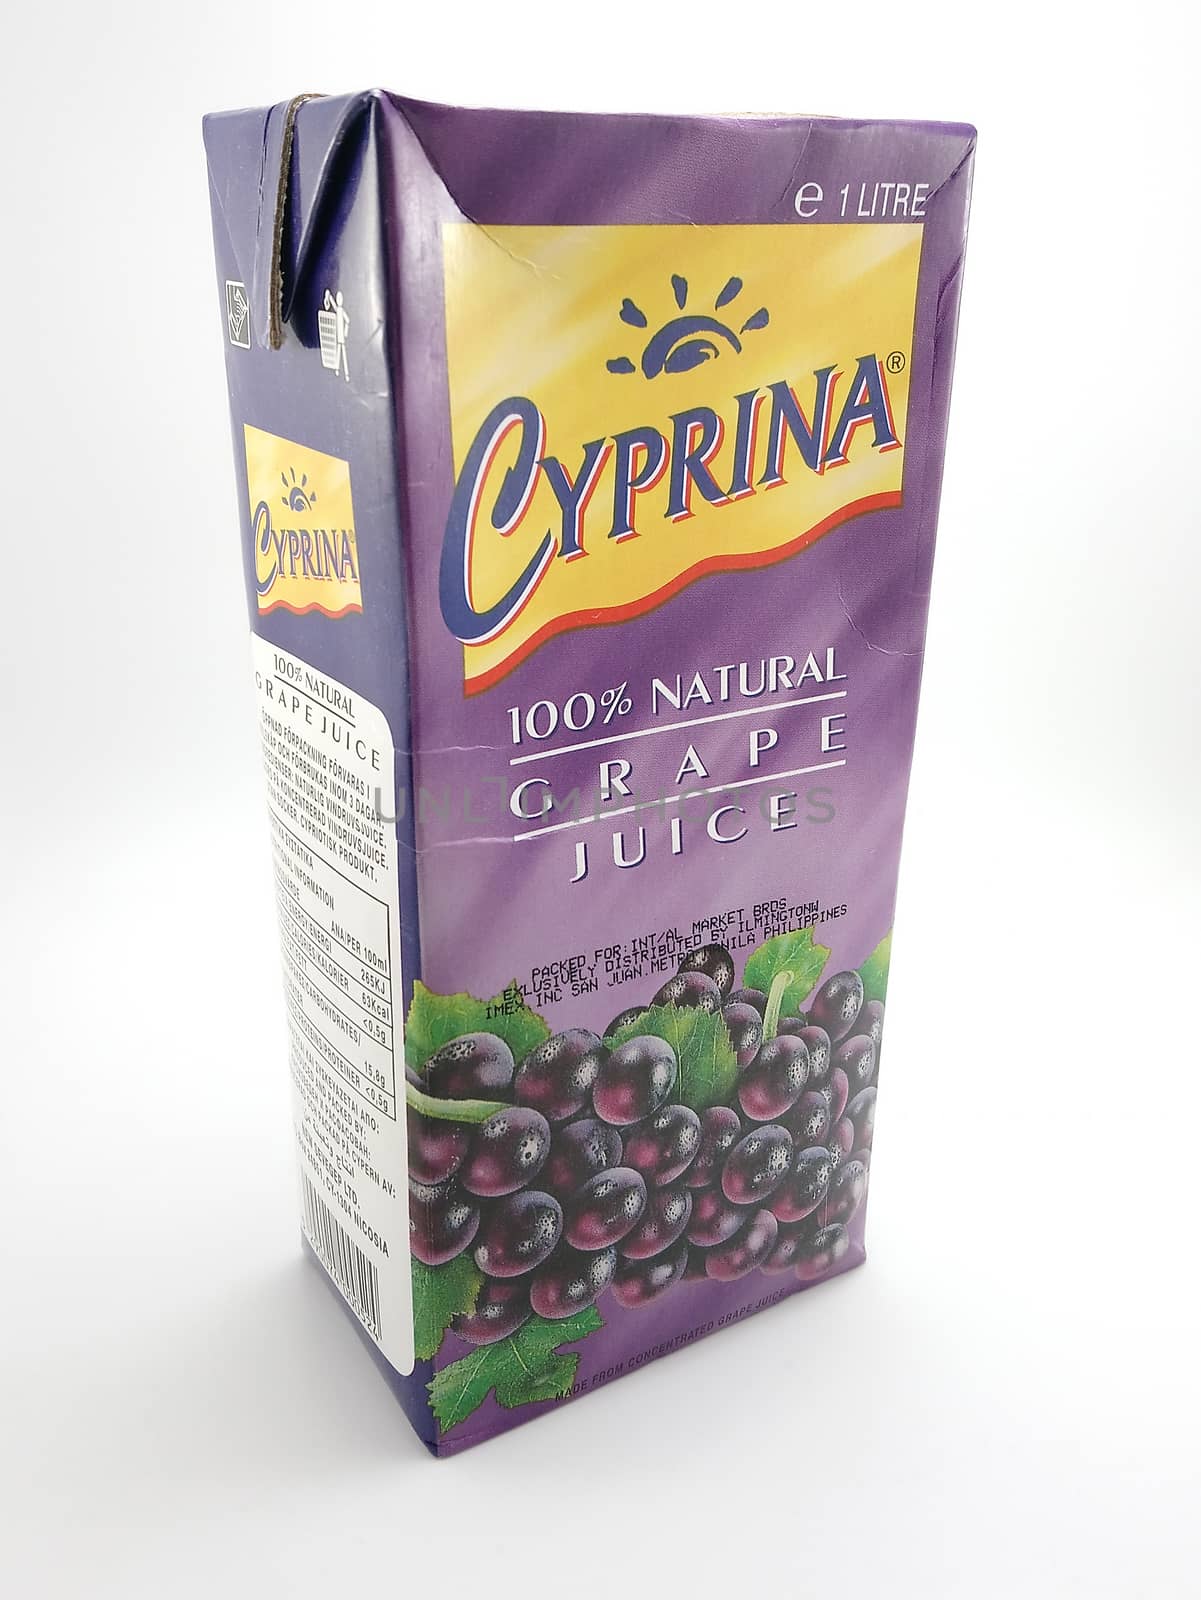 Cyprina grape juice in Manila, Philippines by imwaltersy